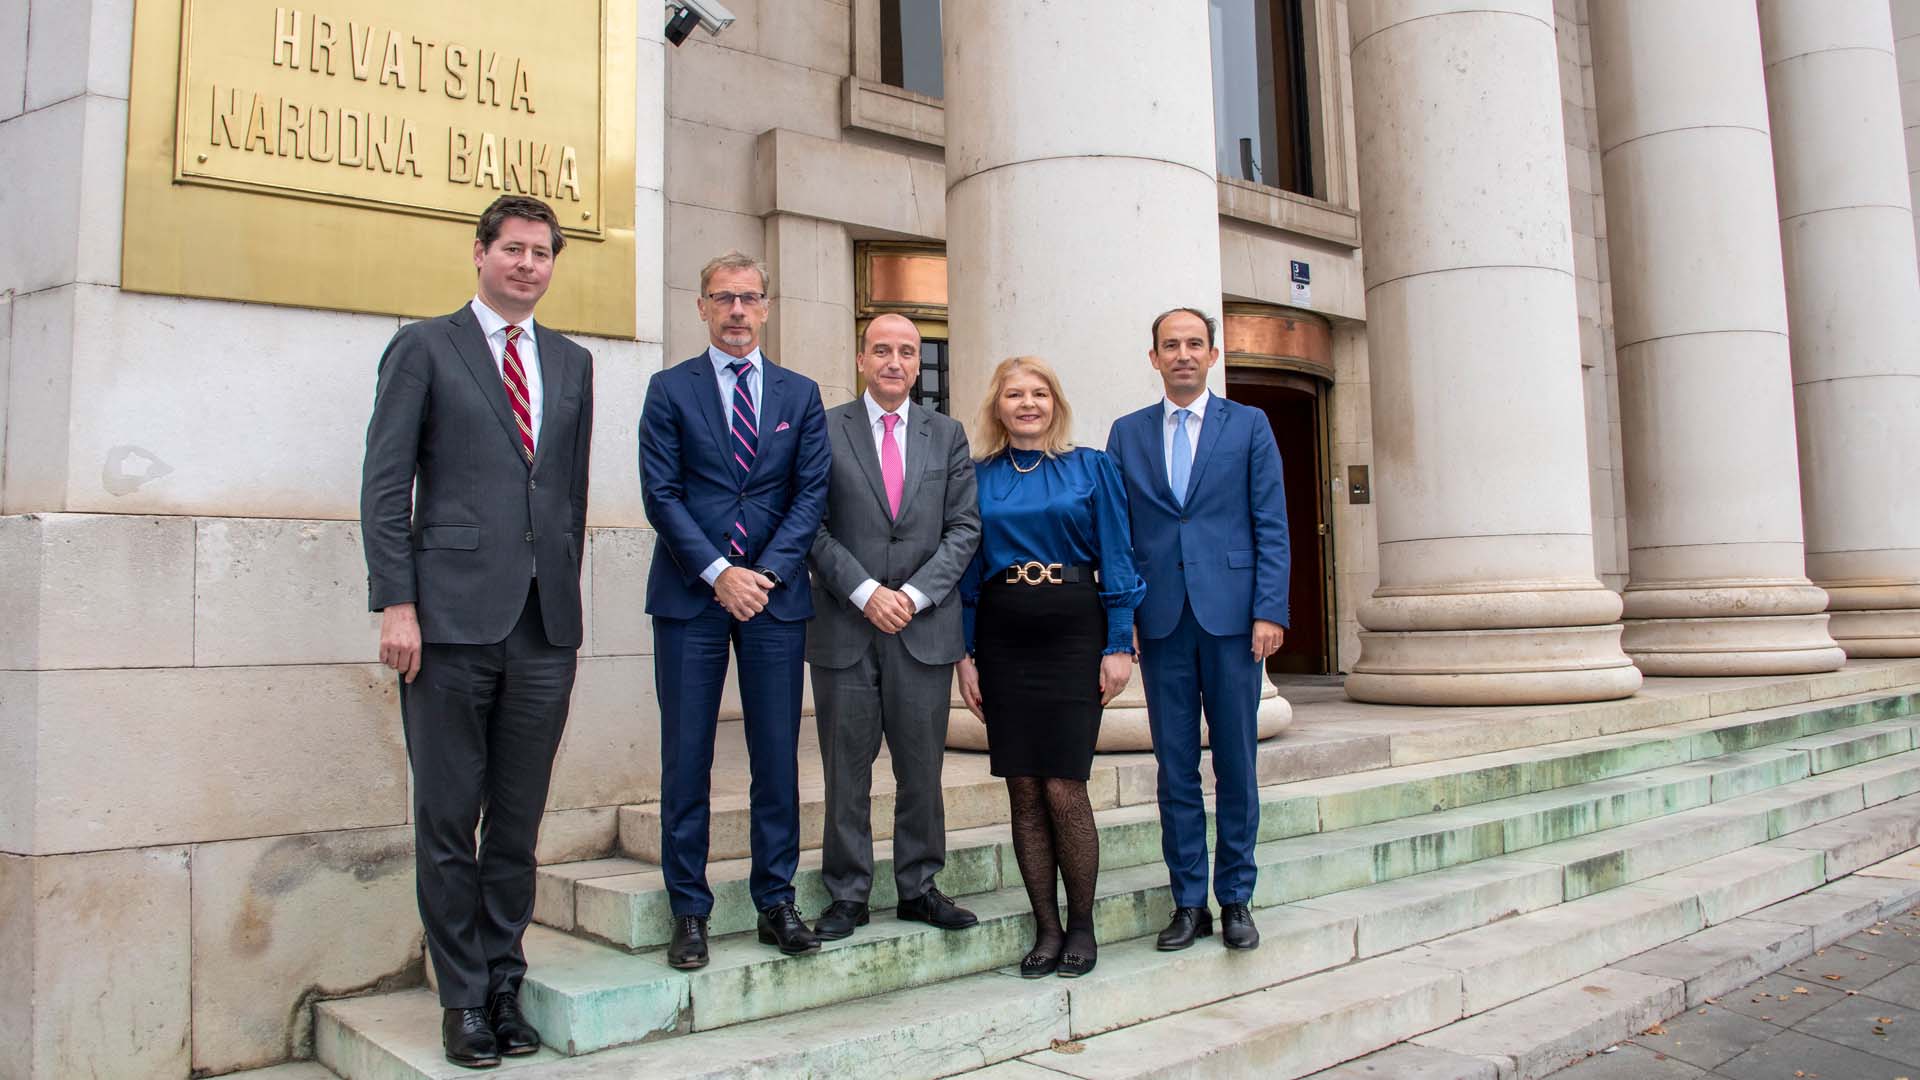 Representatives of the Single Resolution Board visit the Croatian National Bank